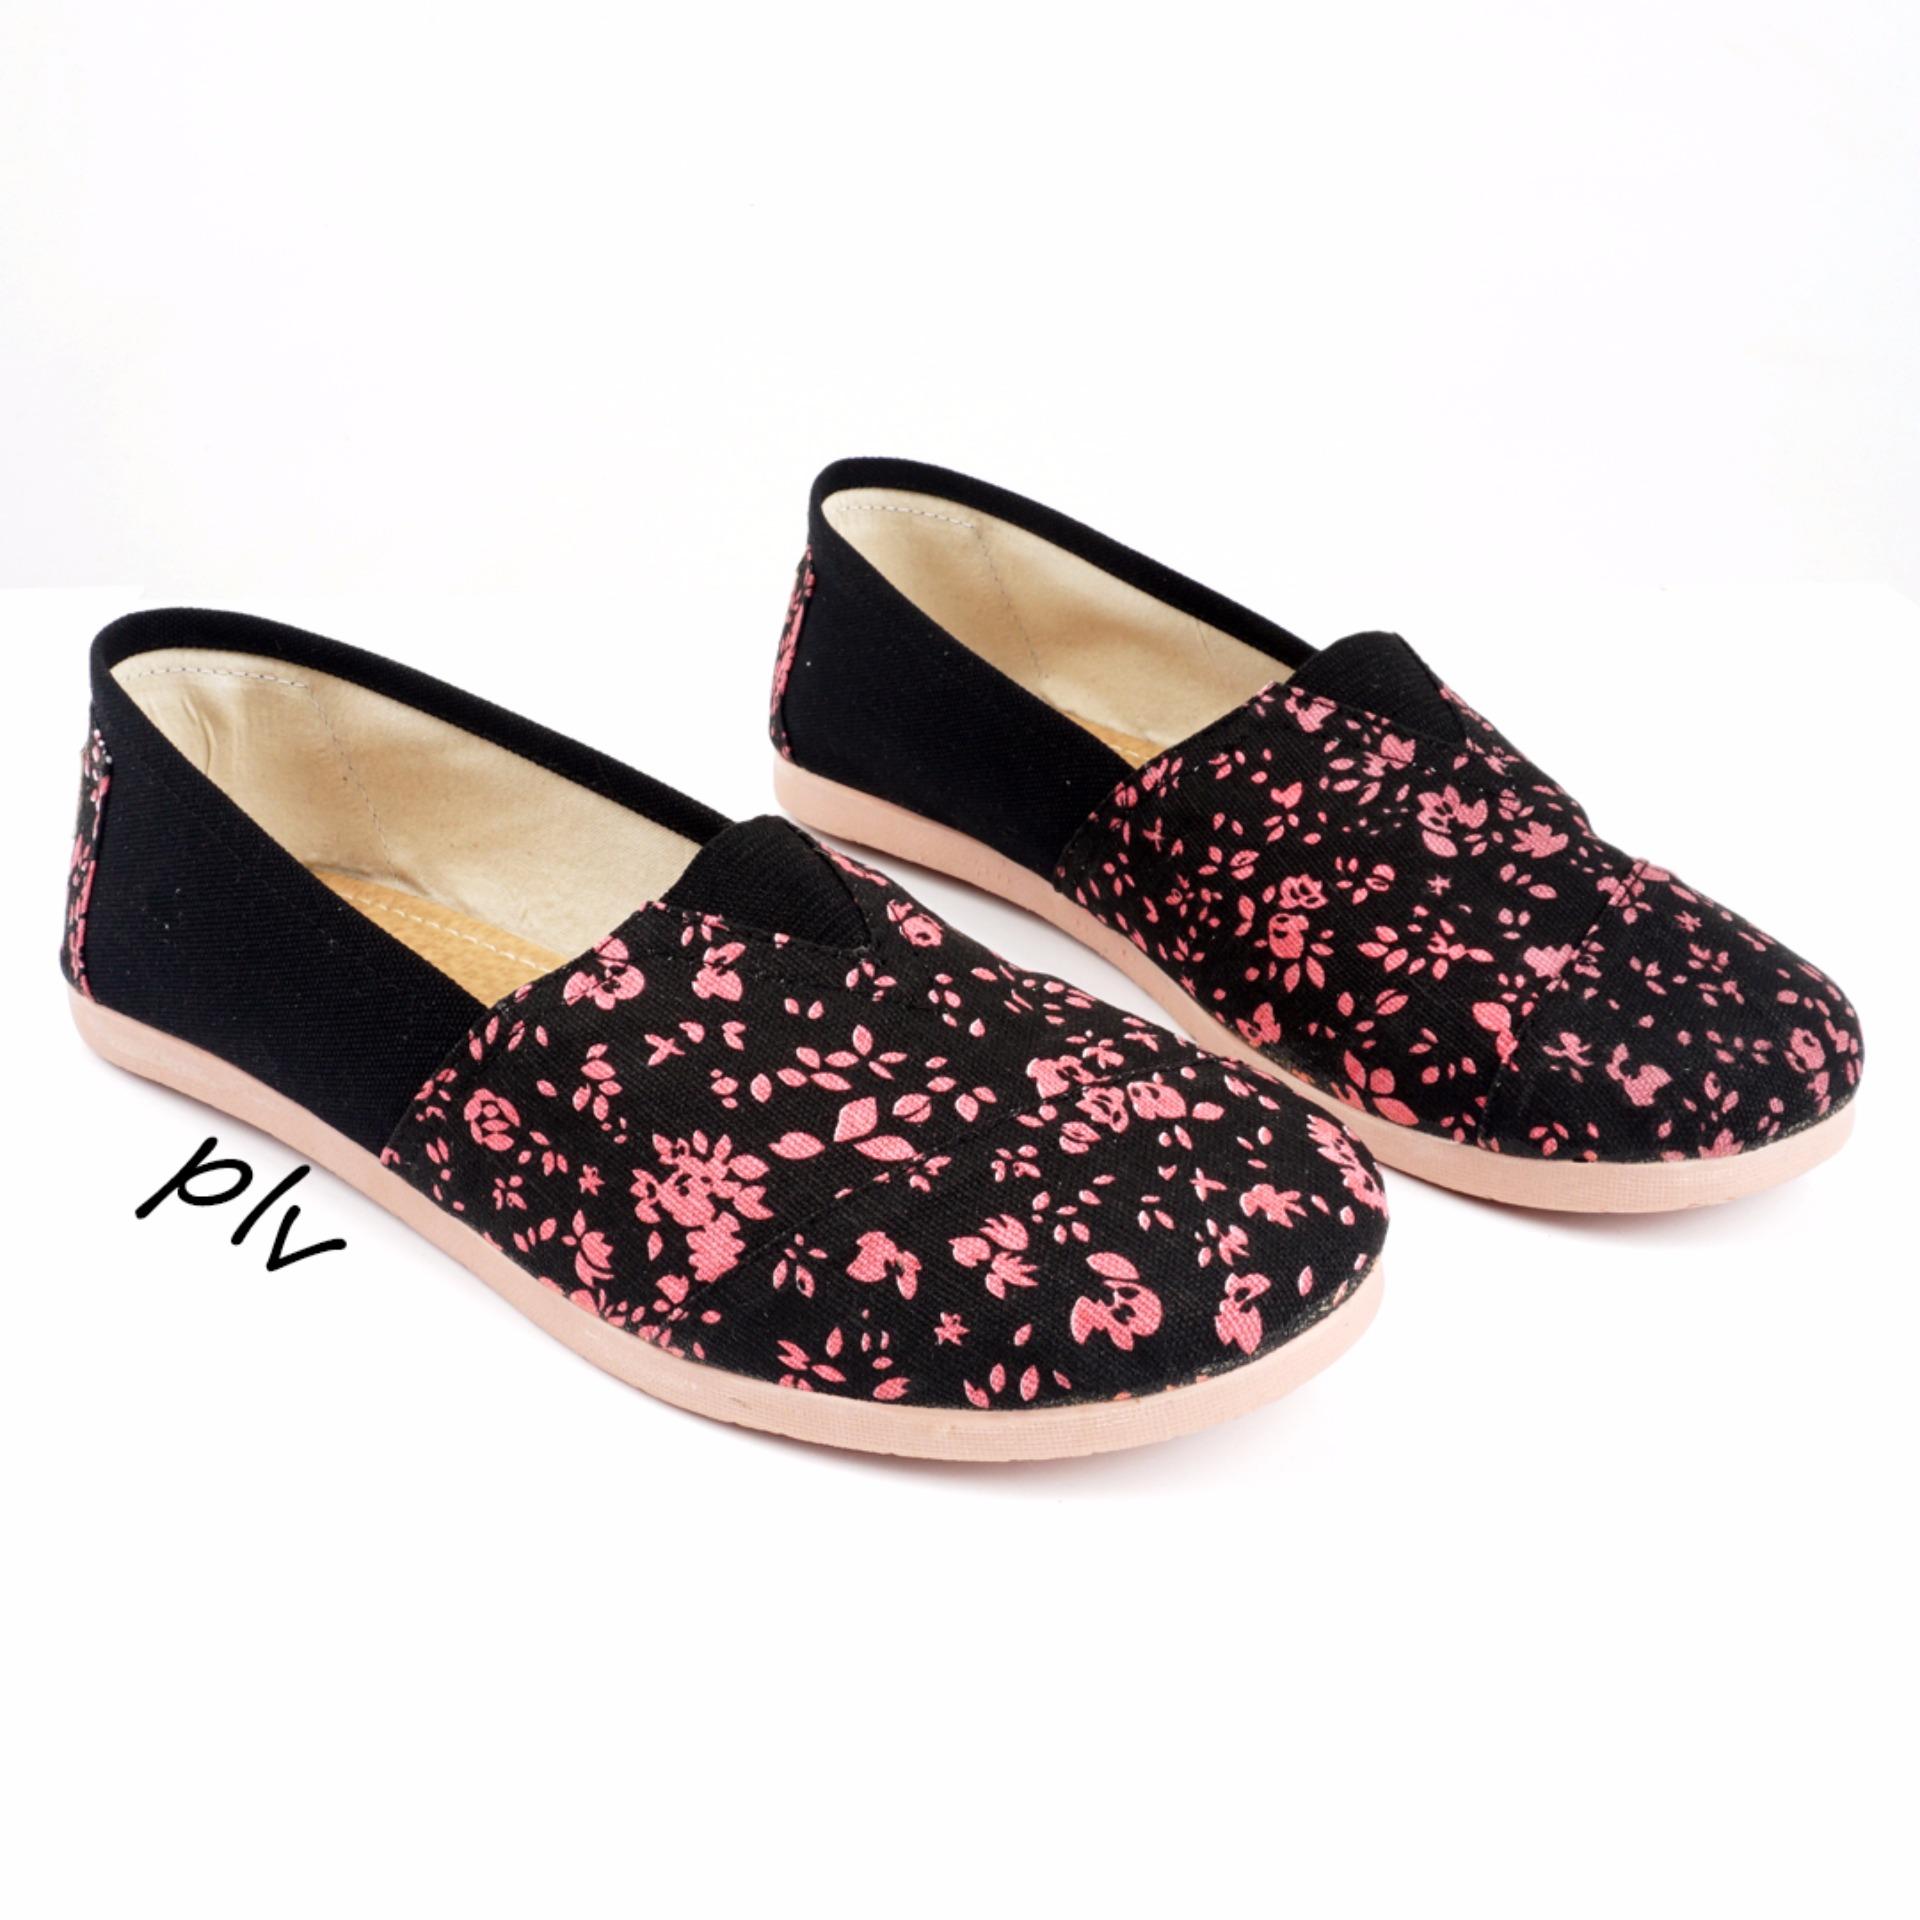 Sepatu Wanita Flat Shoes Slip On Kanvas NS91 Flowery - Hitam